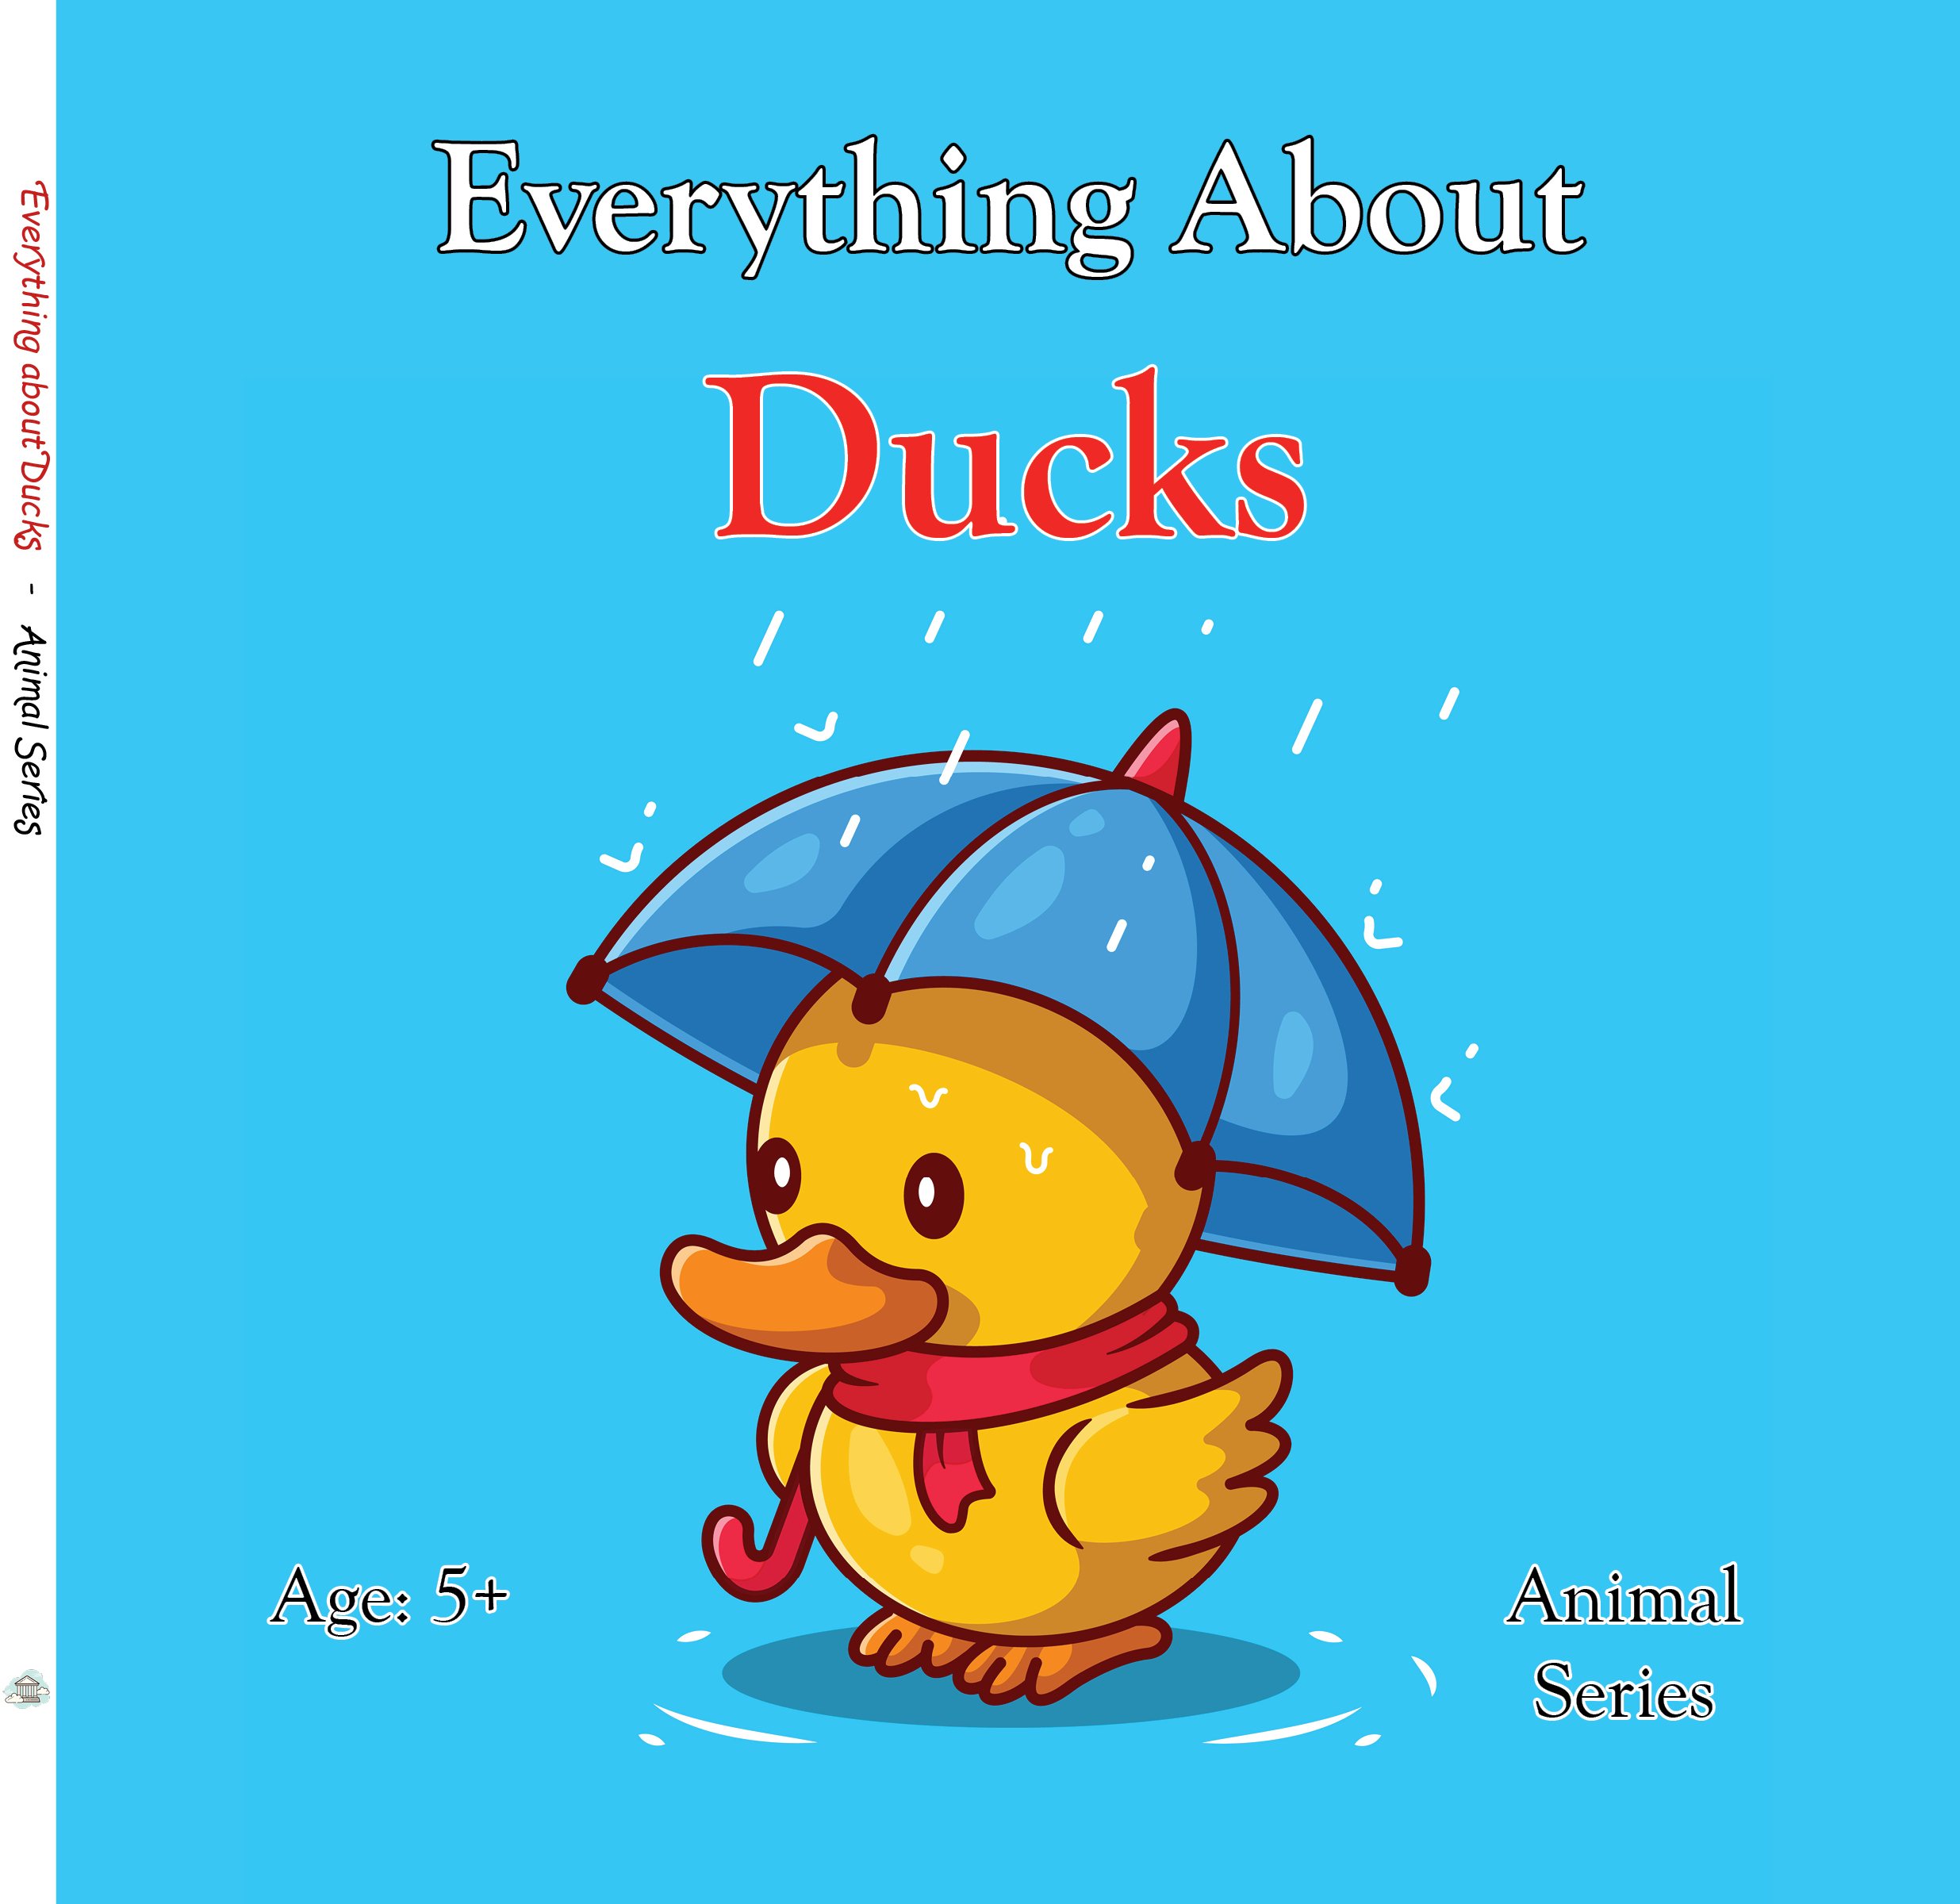 Everything about Ducks - Animal Series.jpg